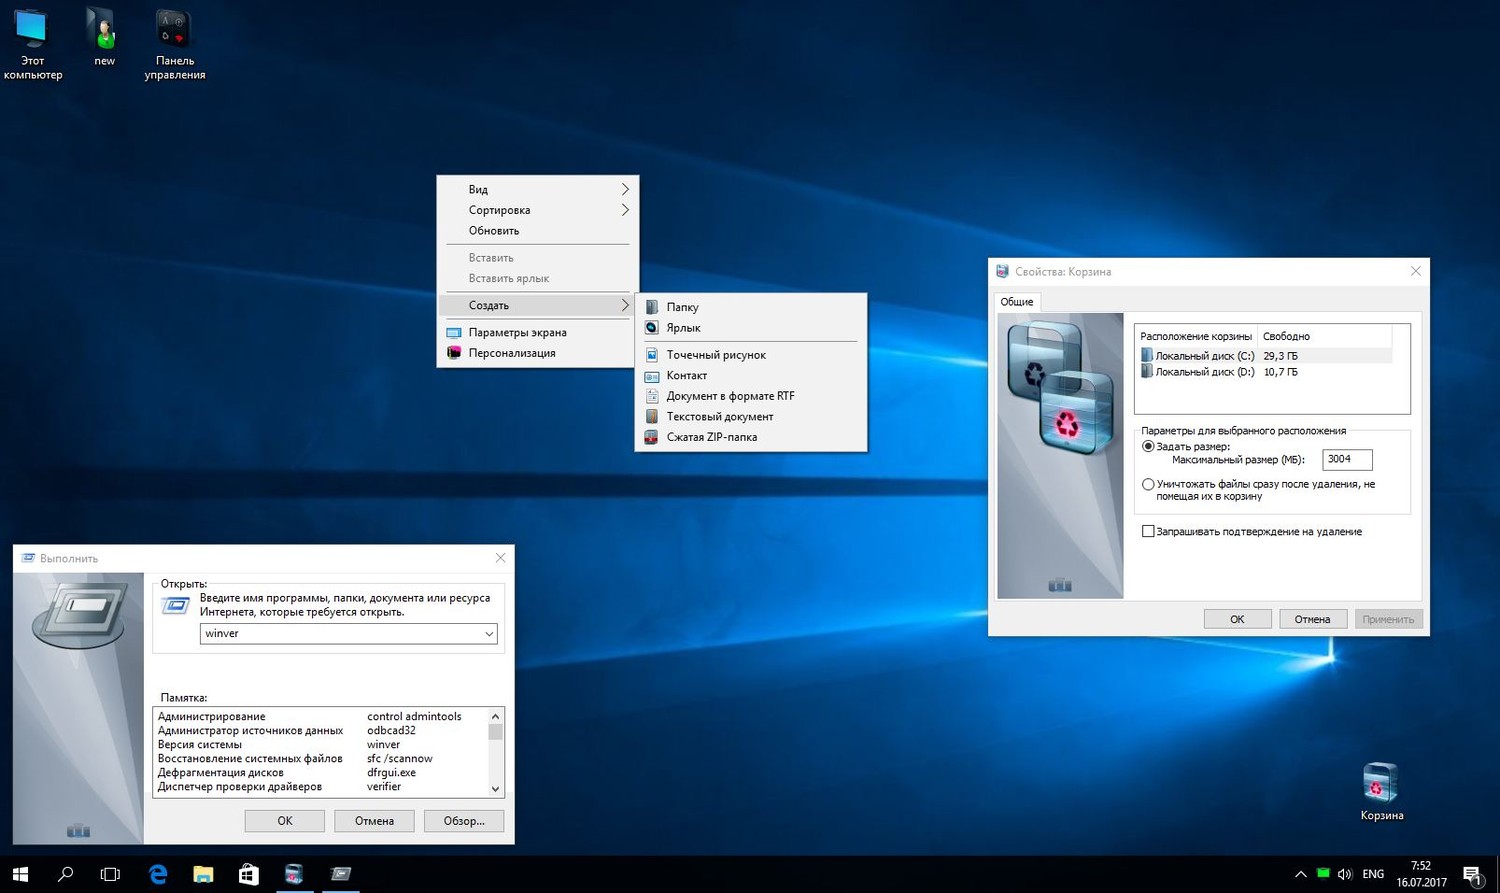 Новая версия 32. Windows 10 32/64бит корпоративная LTSB 14393.223 V.85.16.